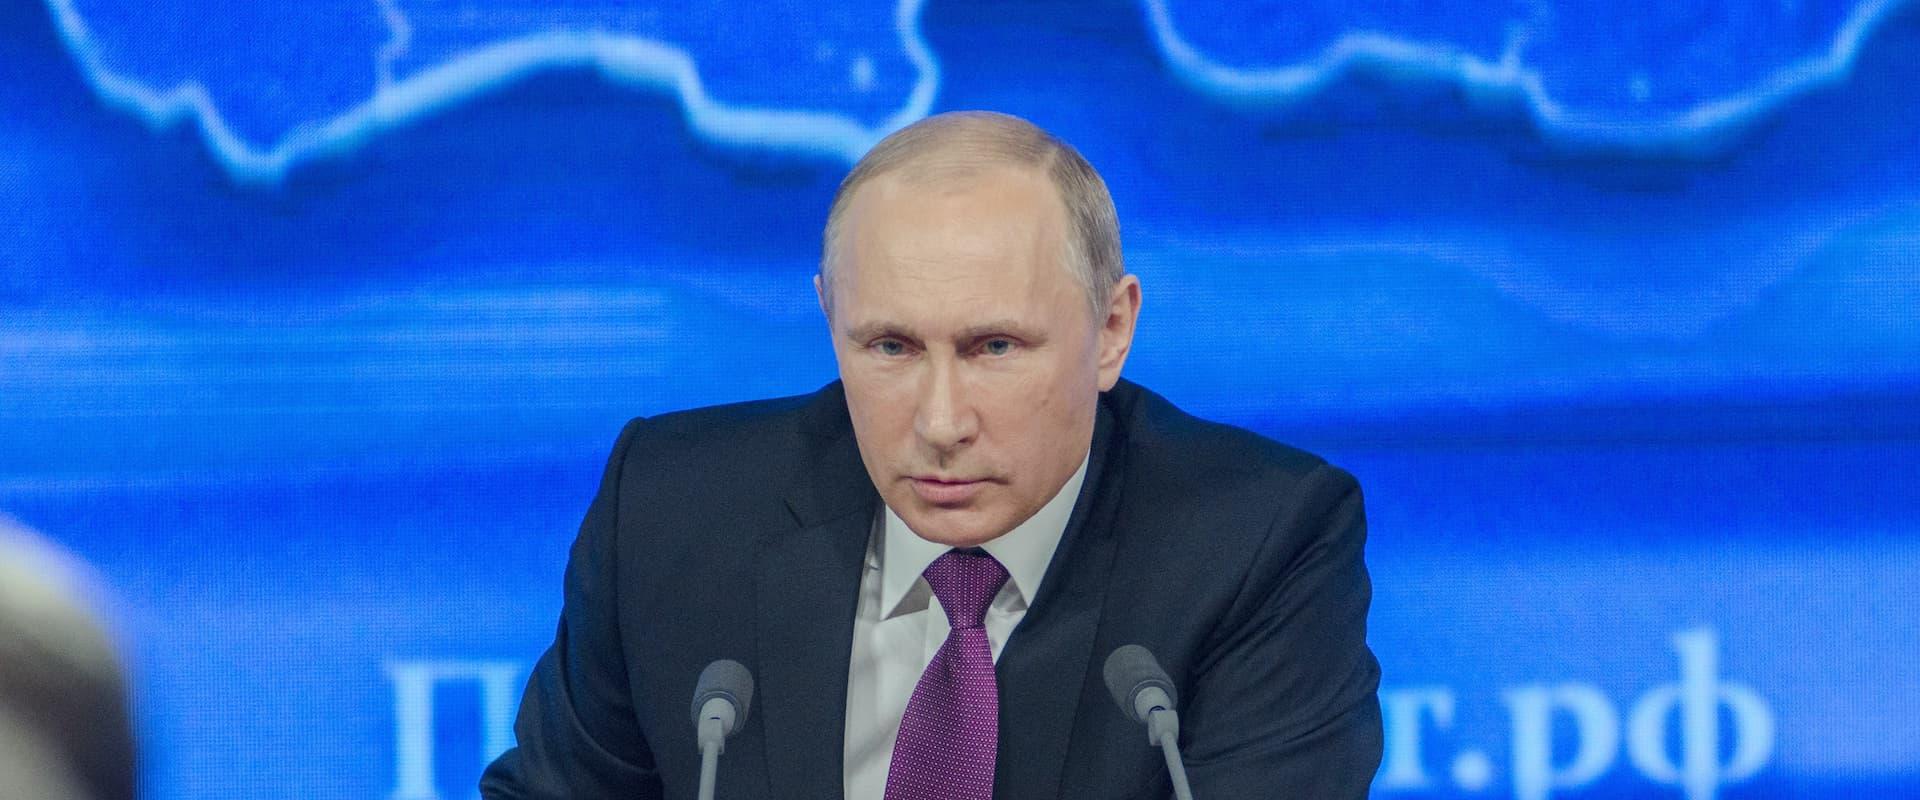 Vladimir Putin at a podium, giving a speech